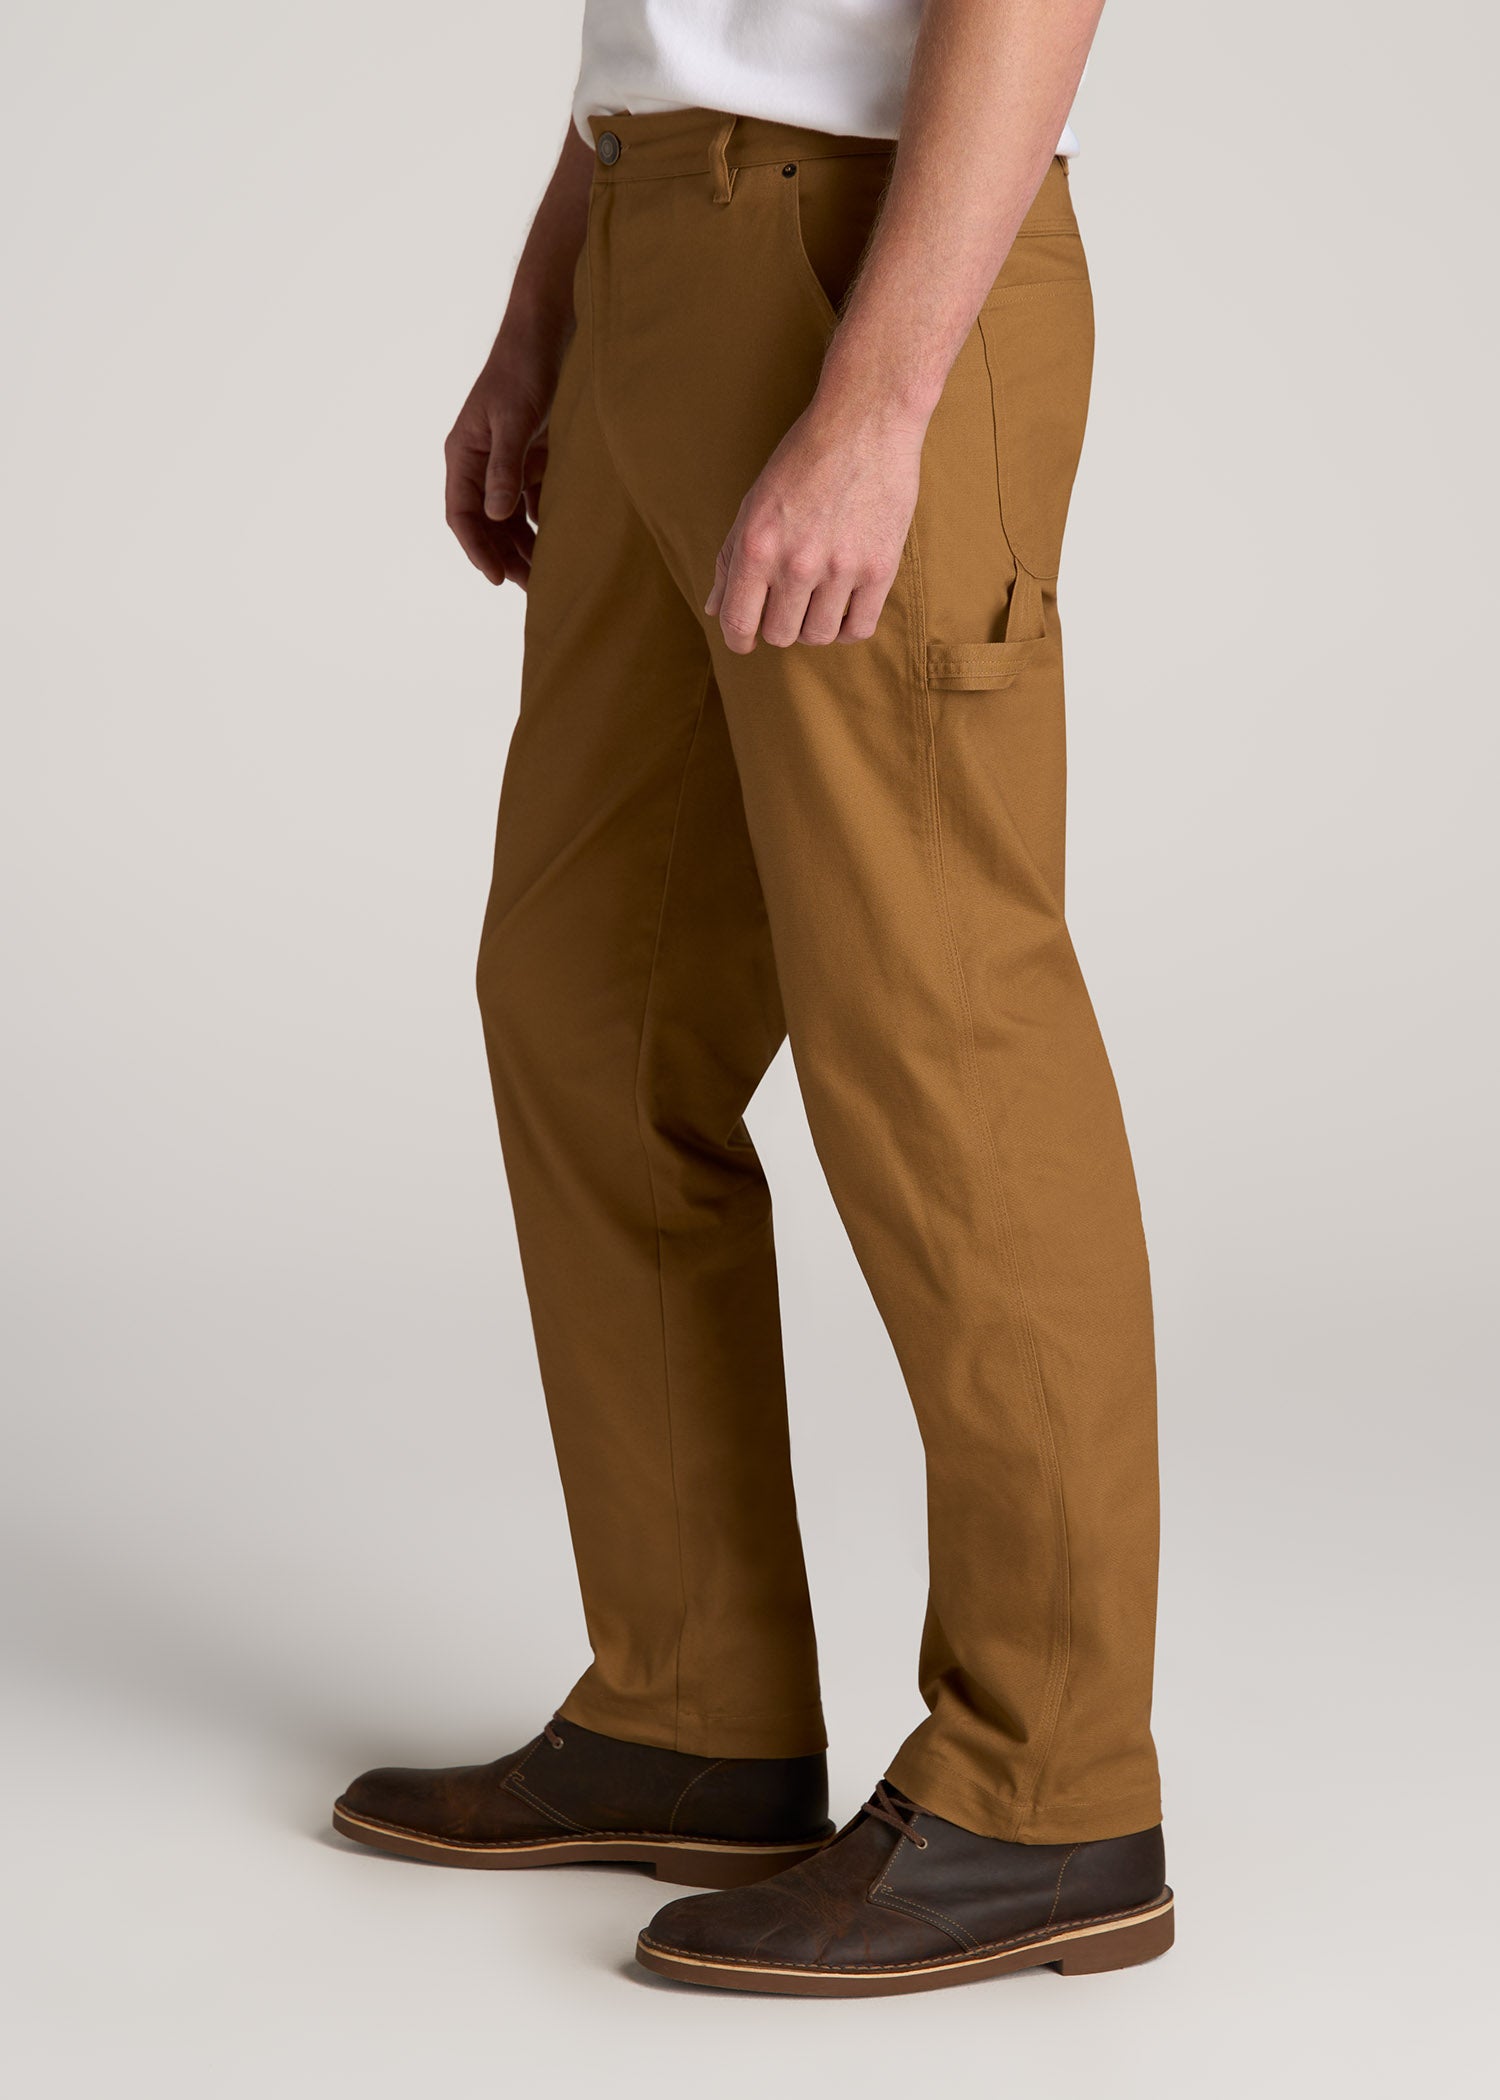 Bronson Double Knee Pants Duck Canvas Logger Carpenter Mens Work Trousers  Brown | eBay